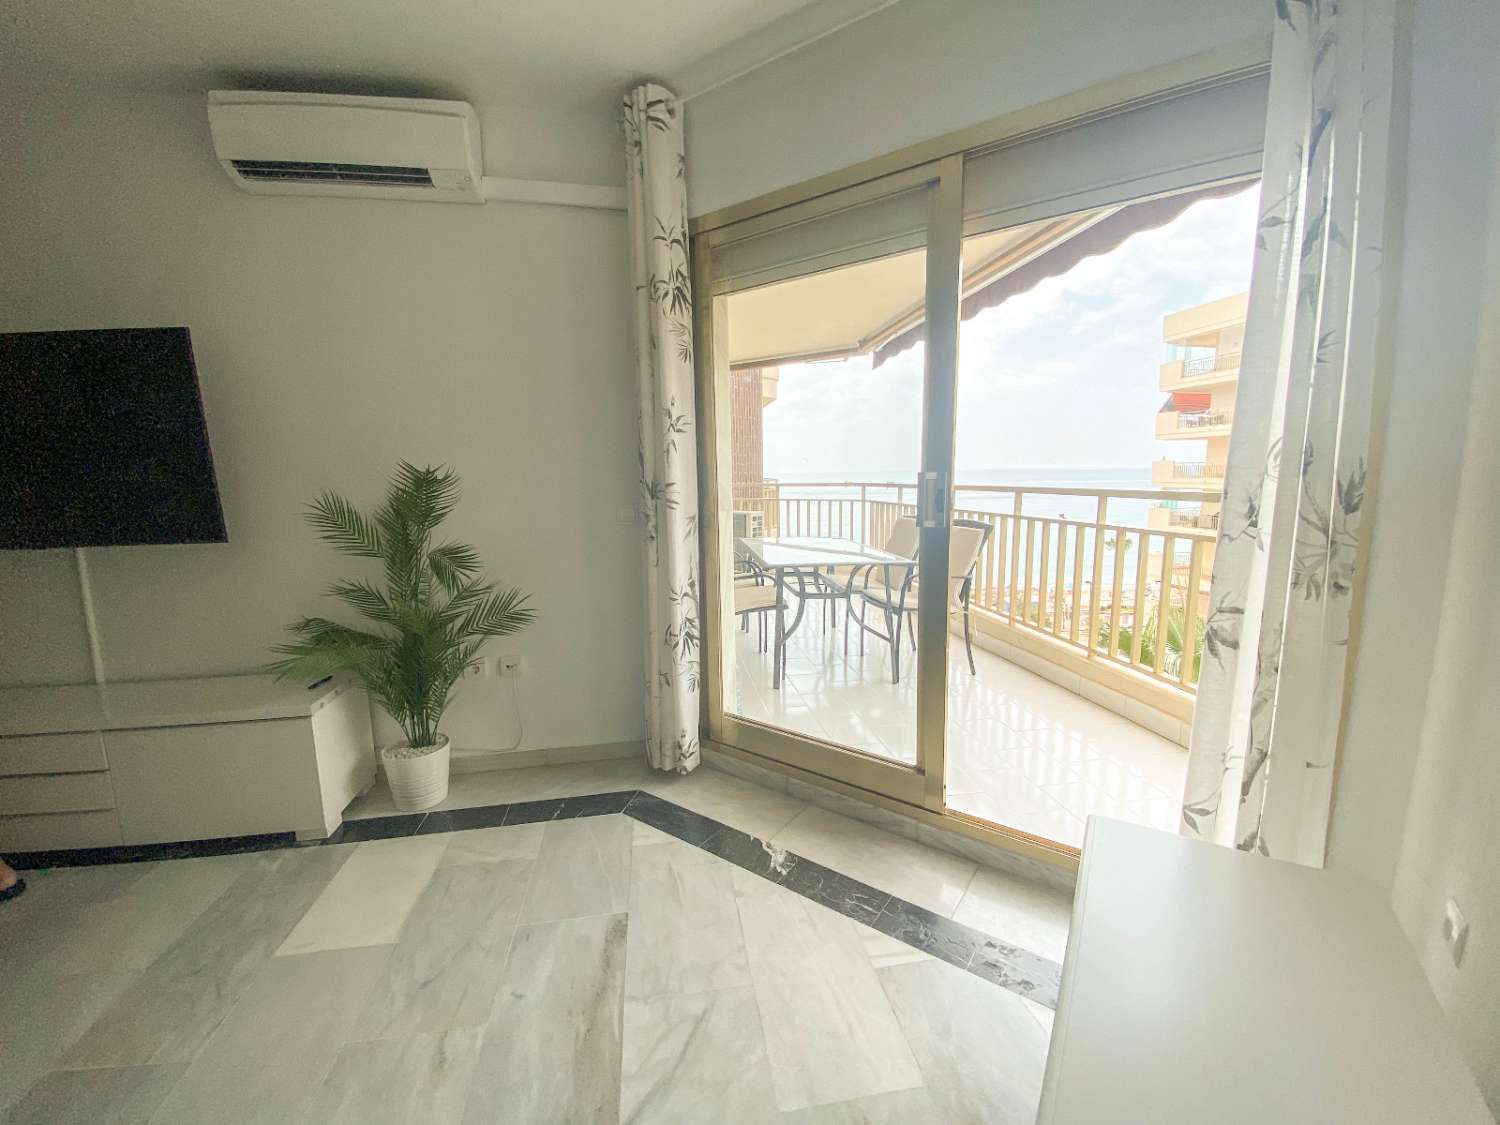 Splendide appartement en bord de mer avec vue mer et terrasse privative